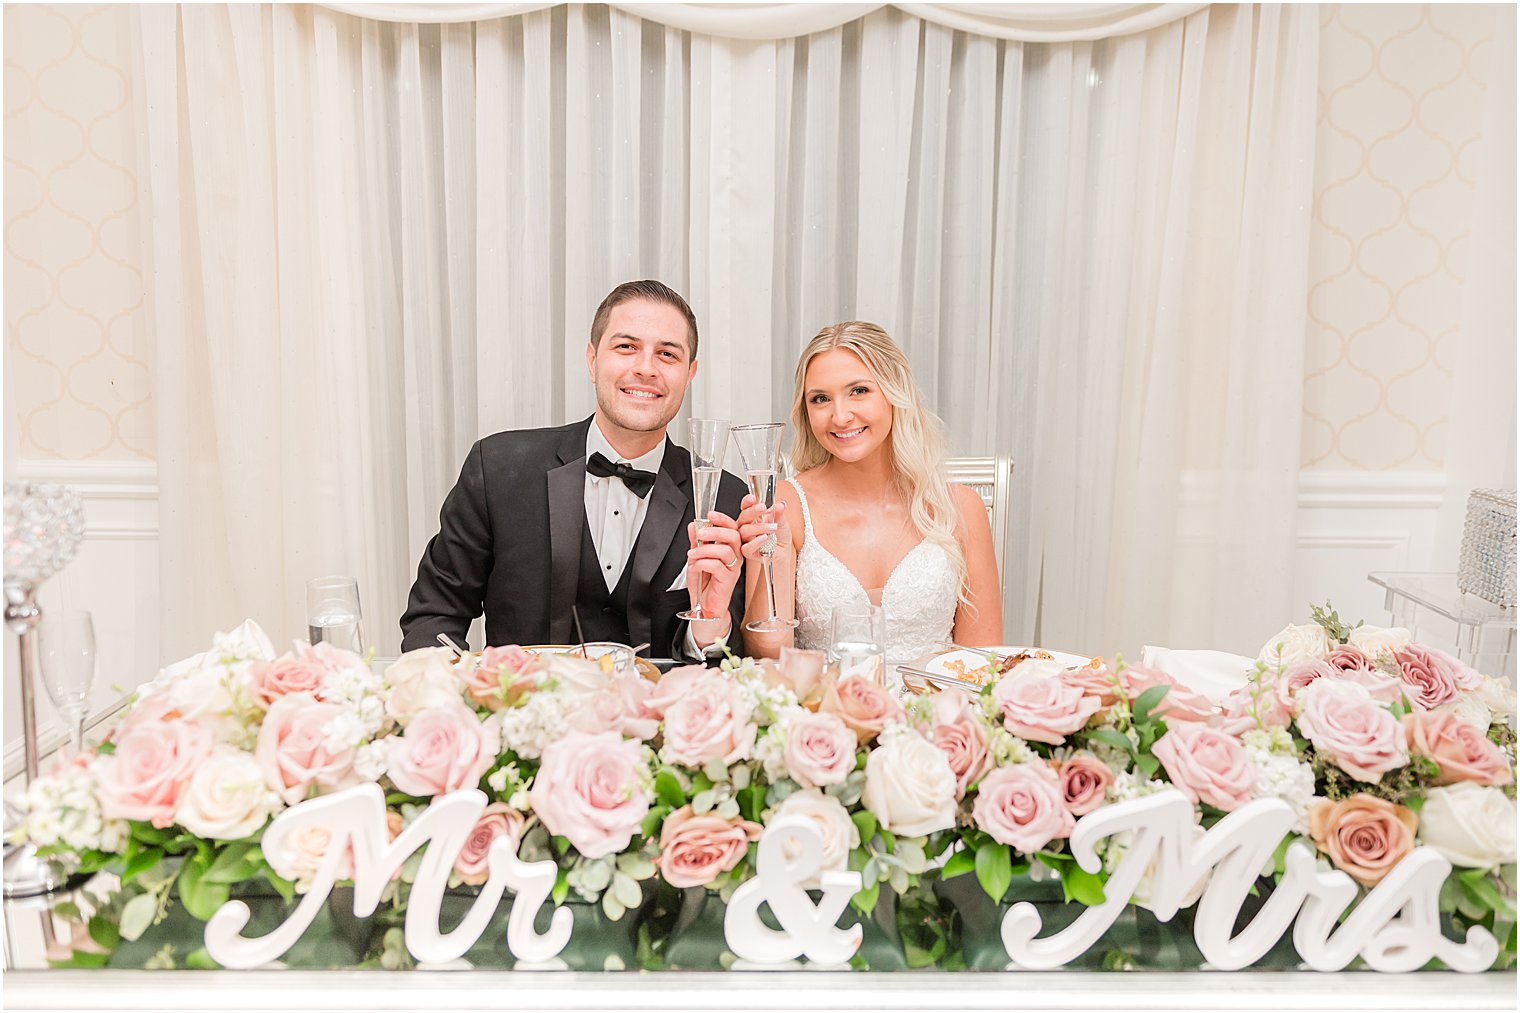 newlyweds toast champagne during wedding reception